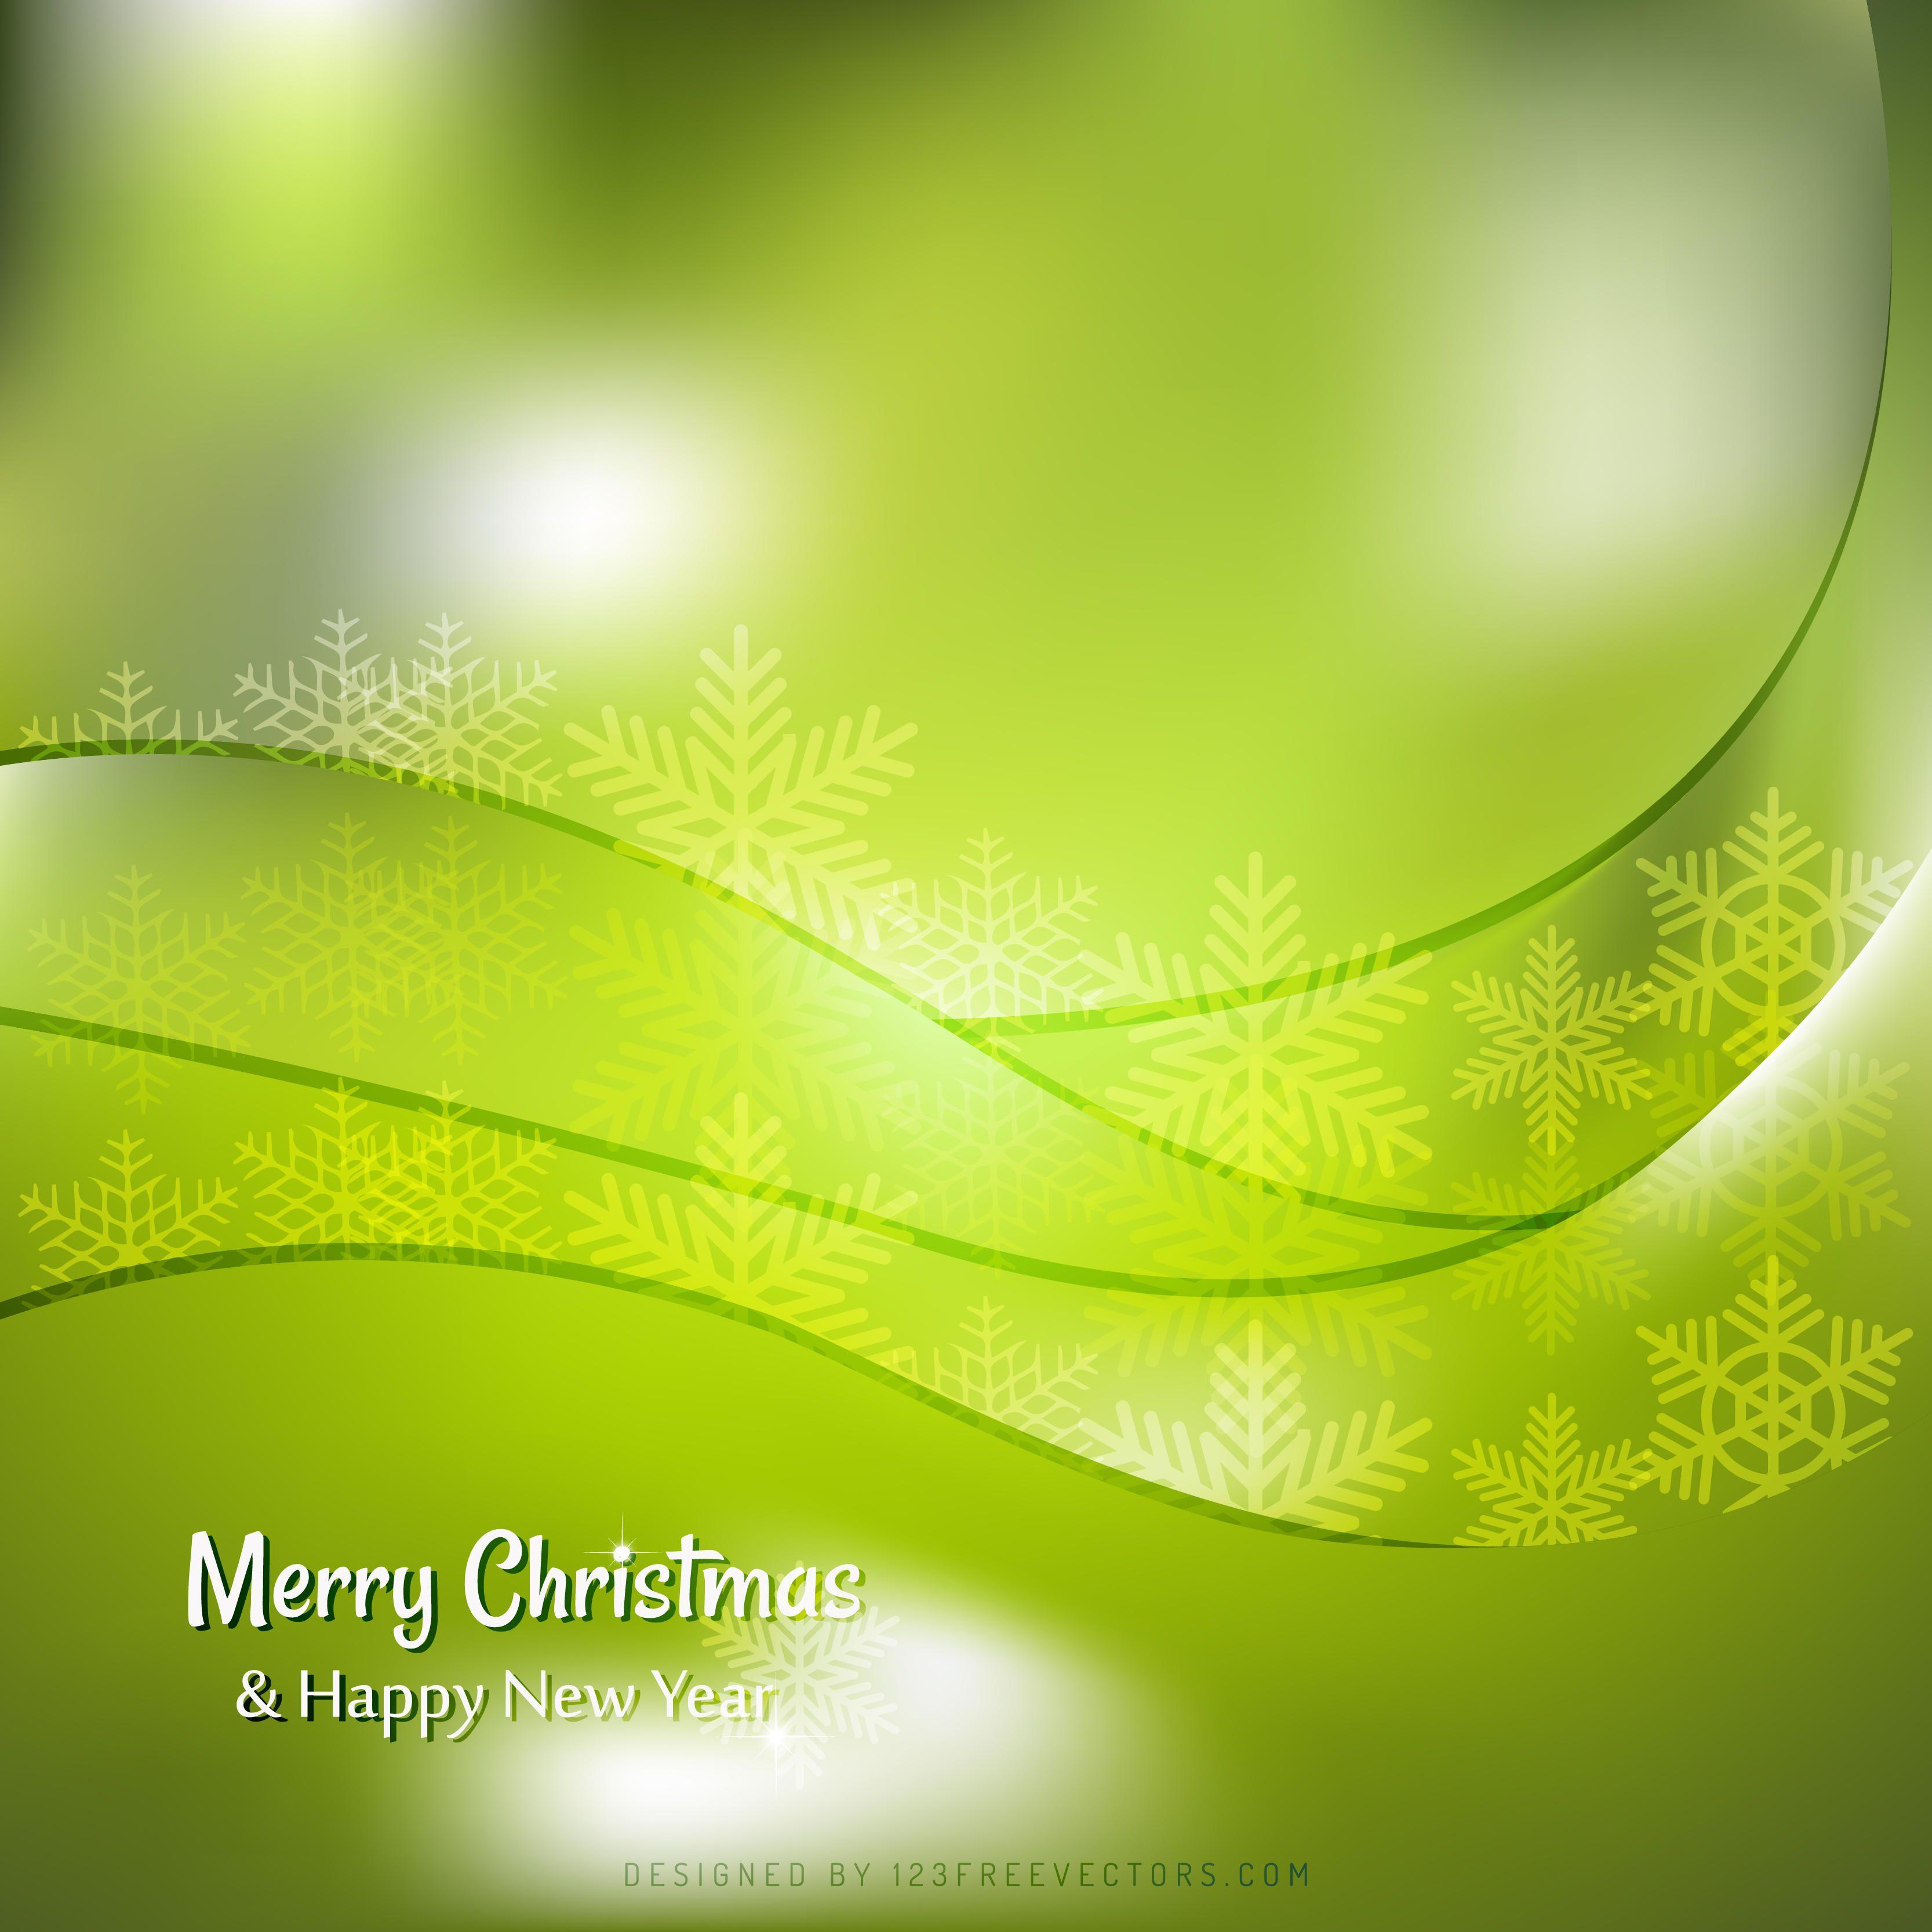 Green Christmas Background Vectors. Download Free Vector Art